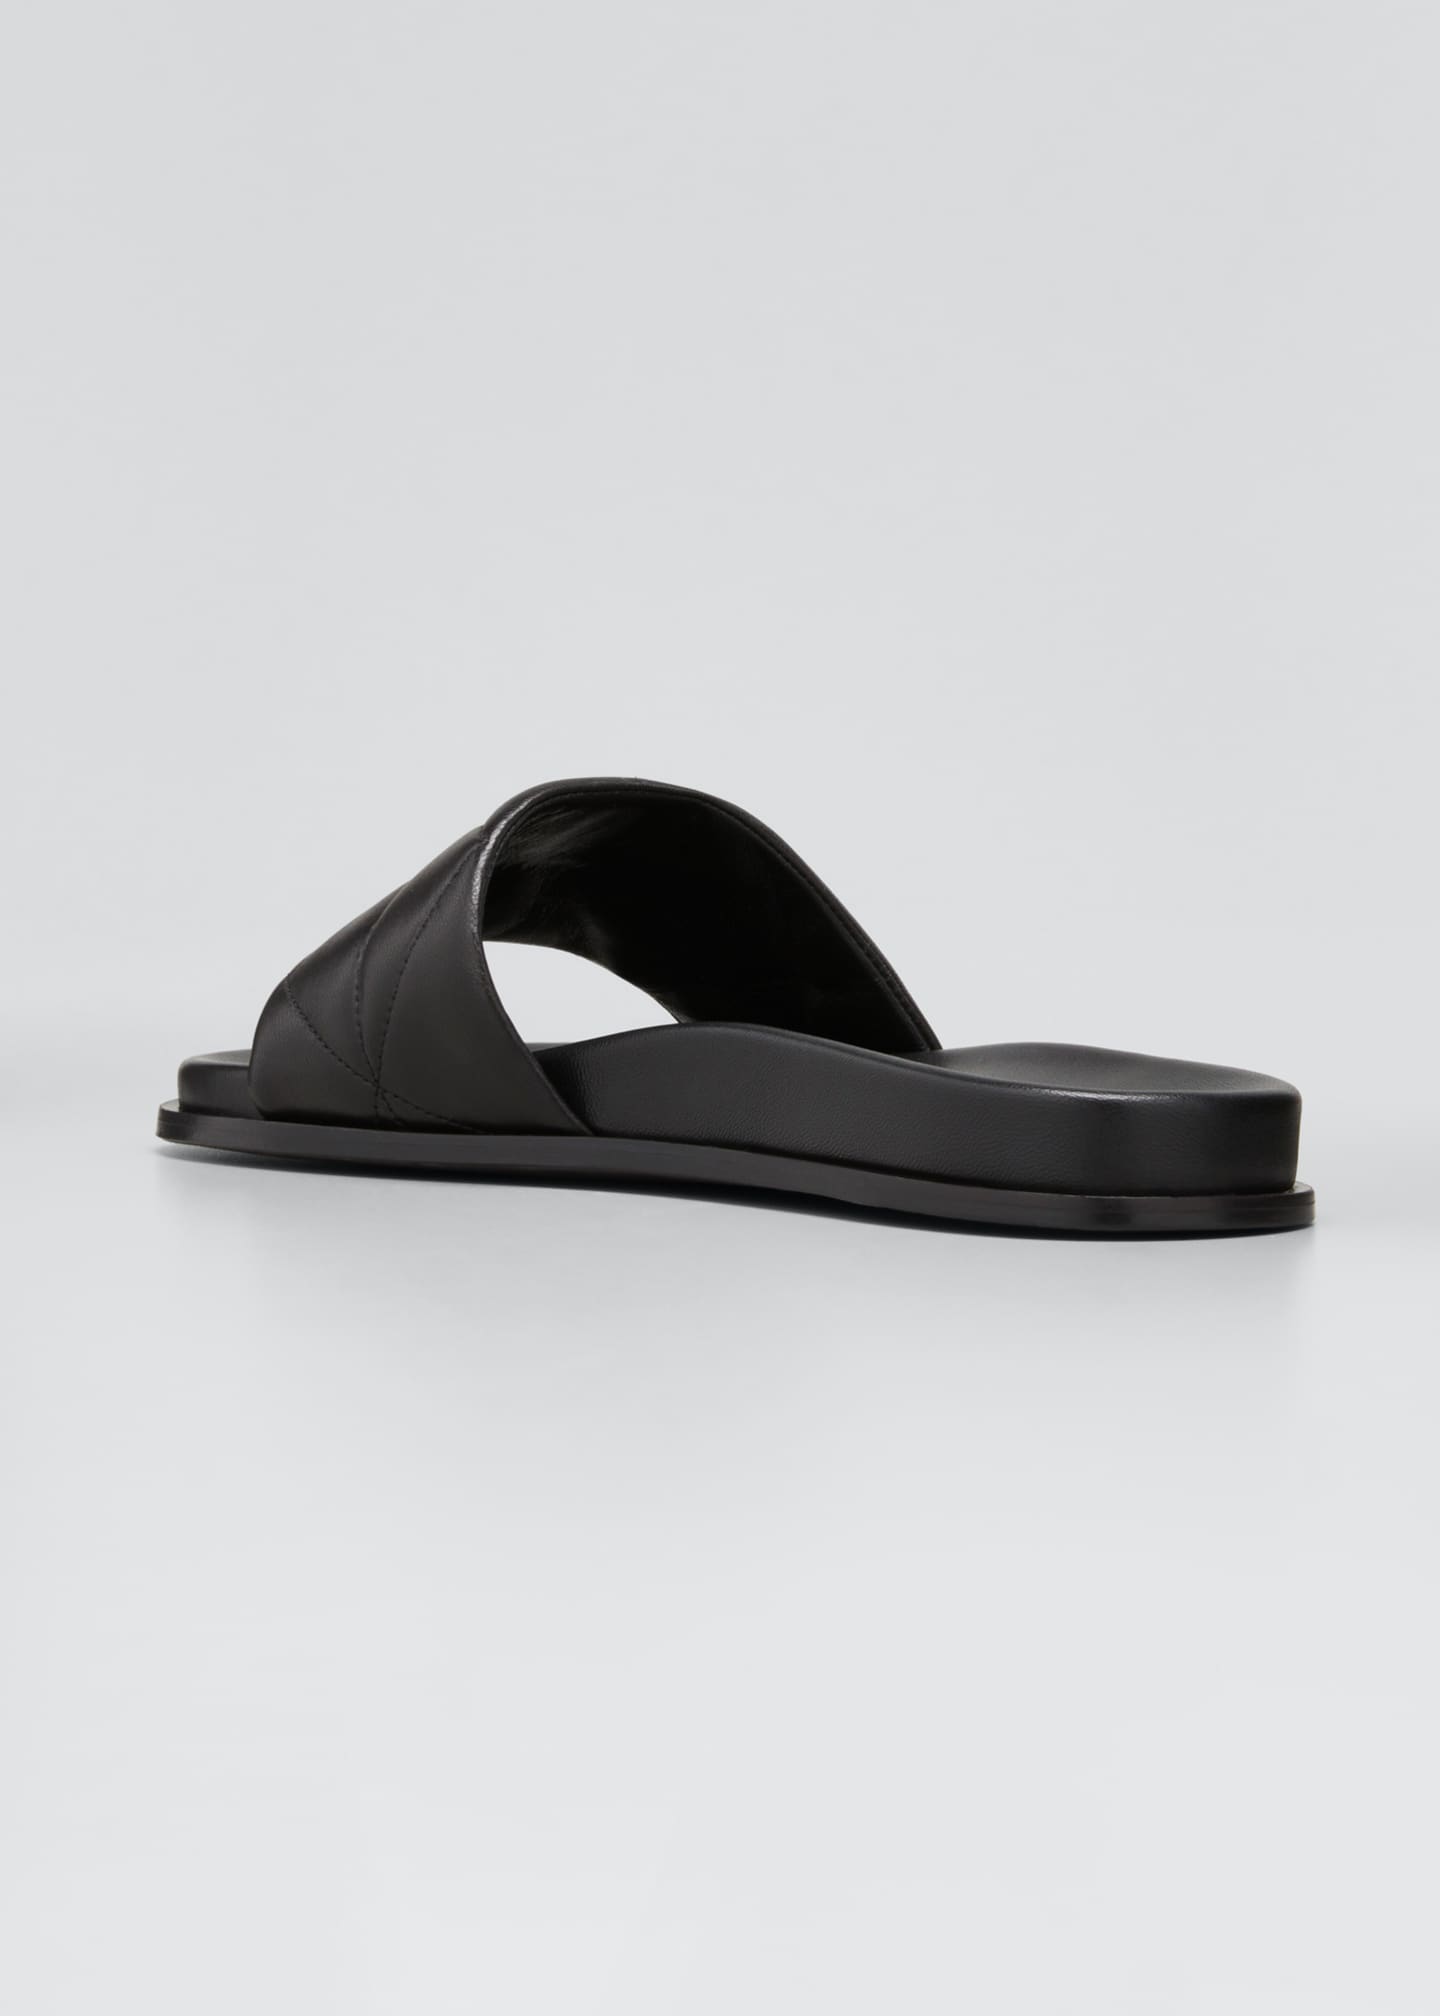 Prada Quilted Leather Pool Sandals - Bergdorf Goodman